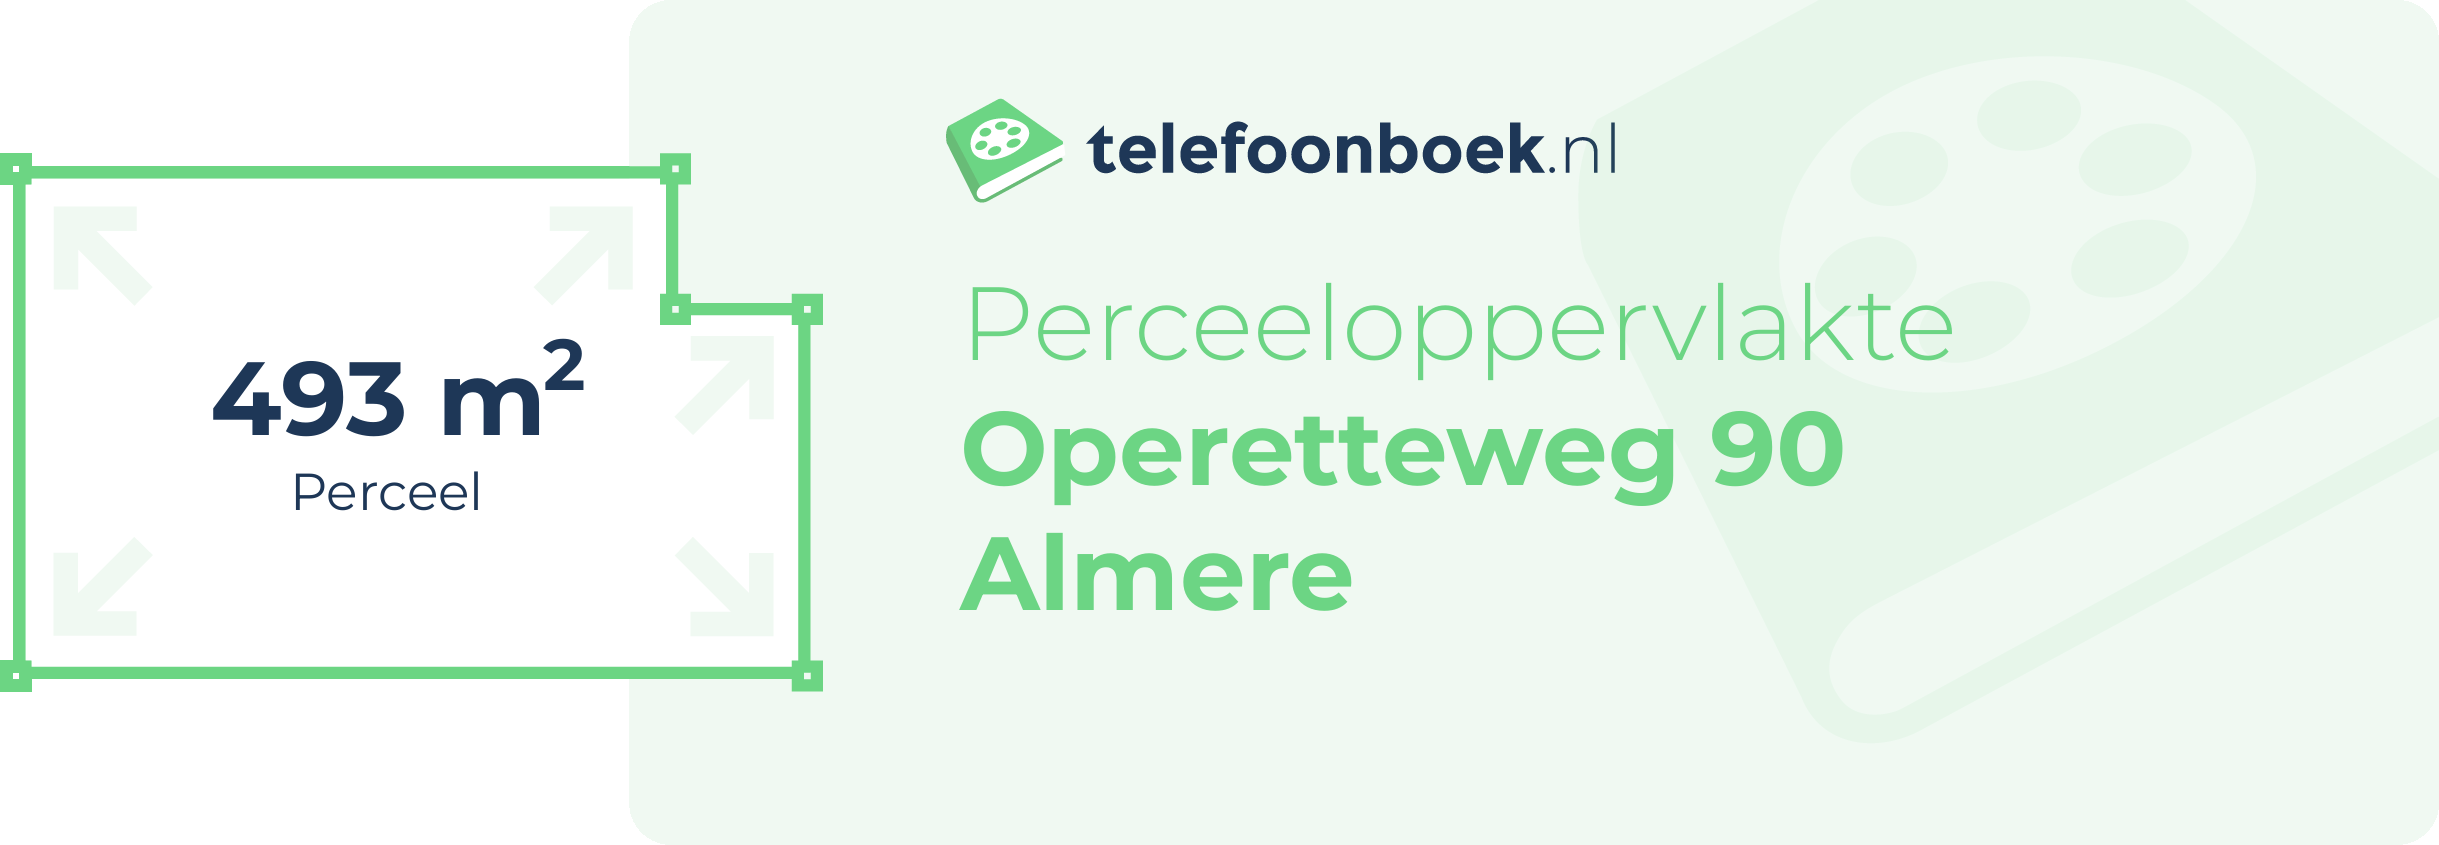 Perceeloppervlakte Operetteweg 90 Almere